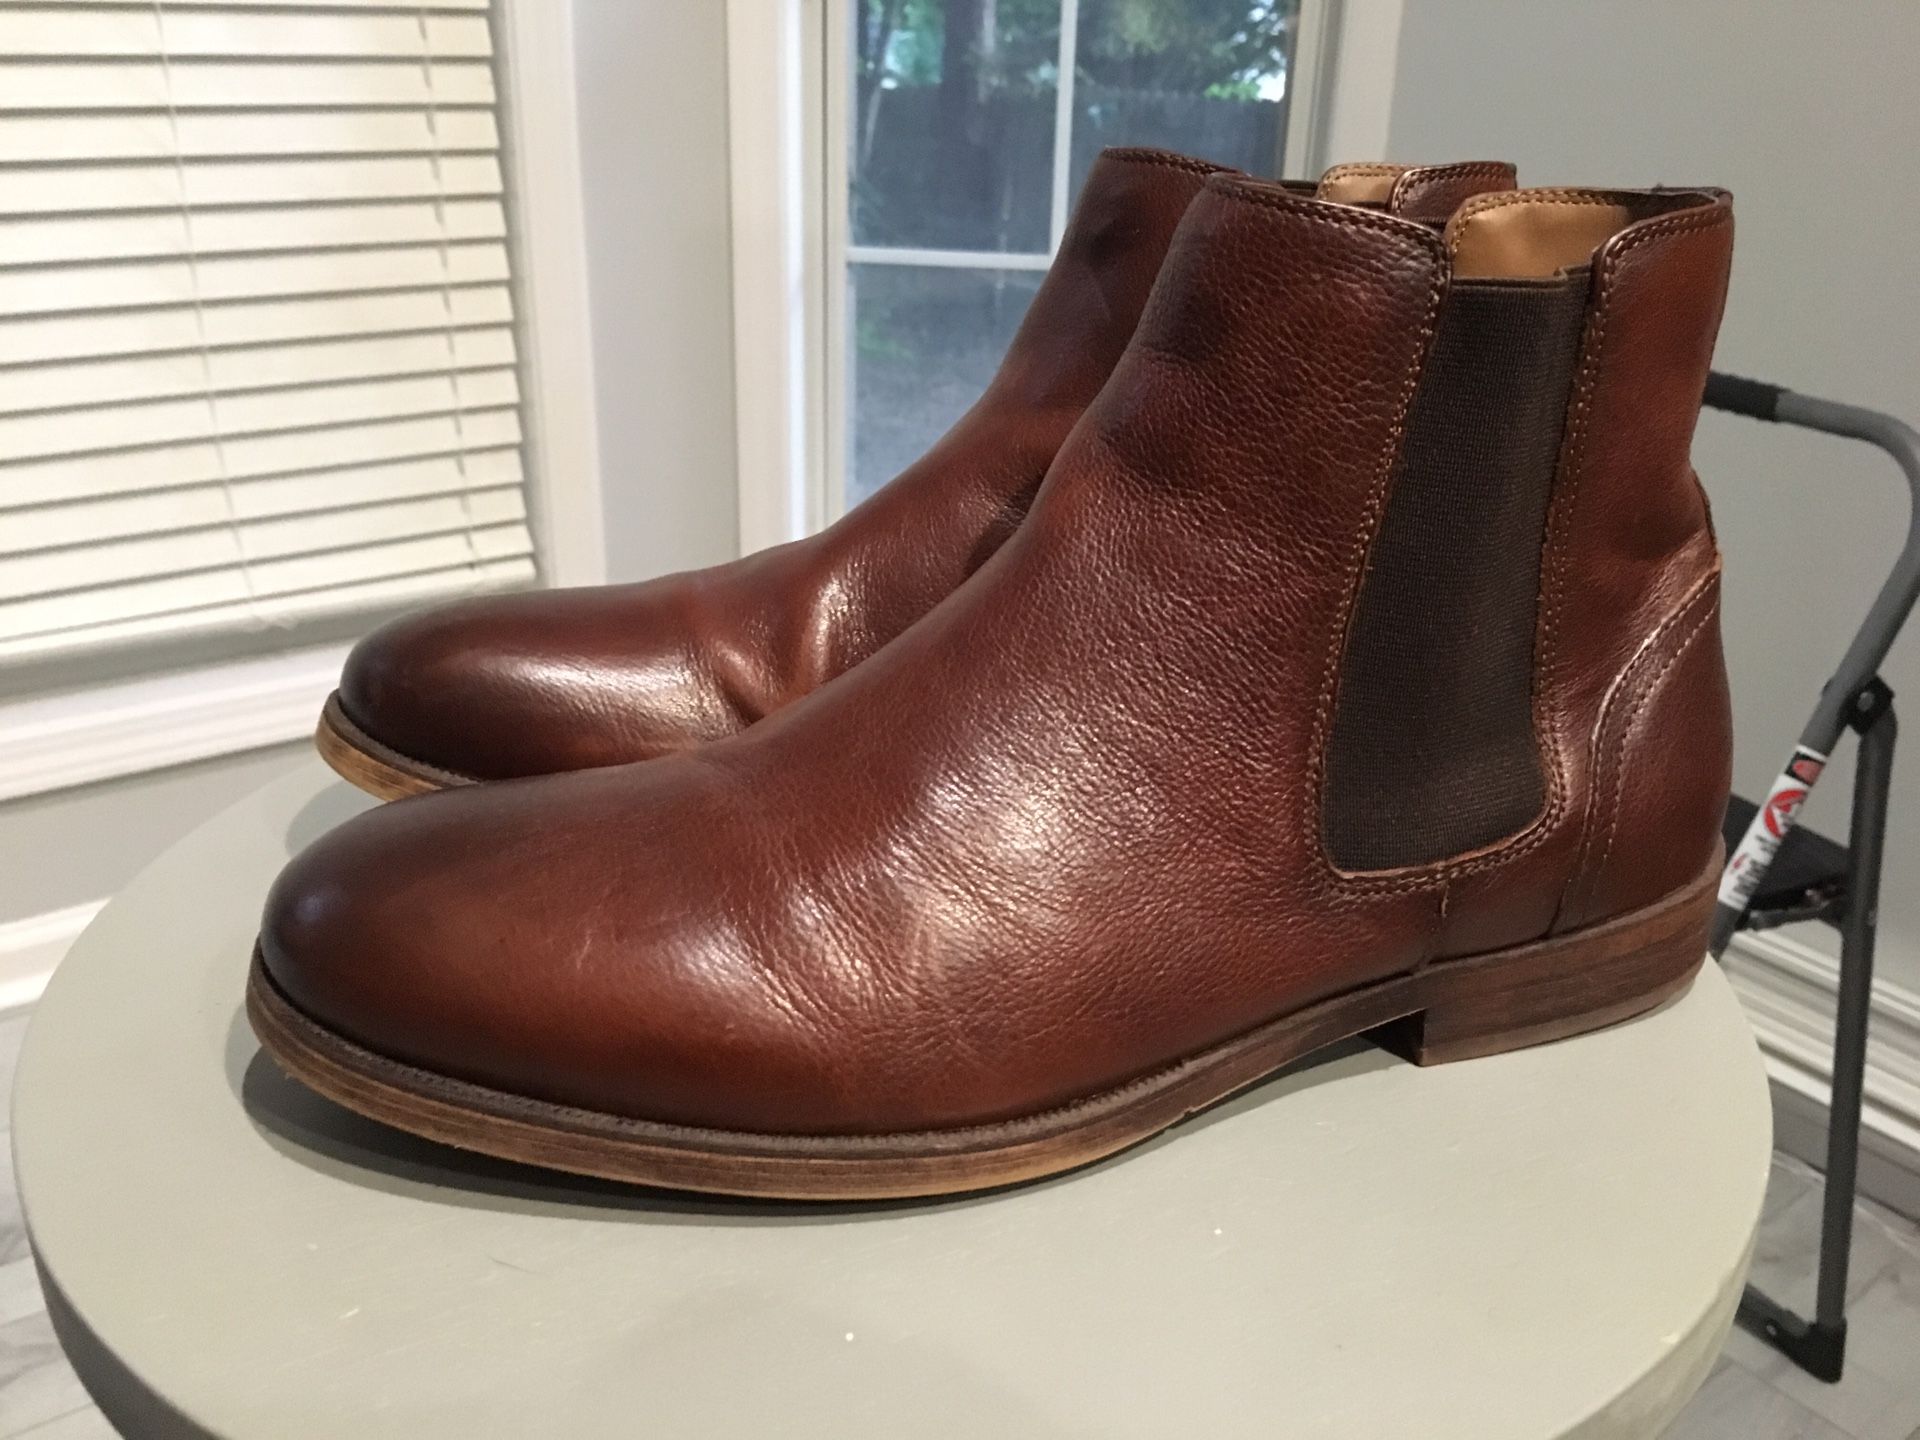 Aldo Chelsea Boots (Size 9)